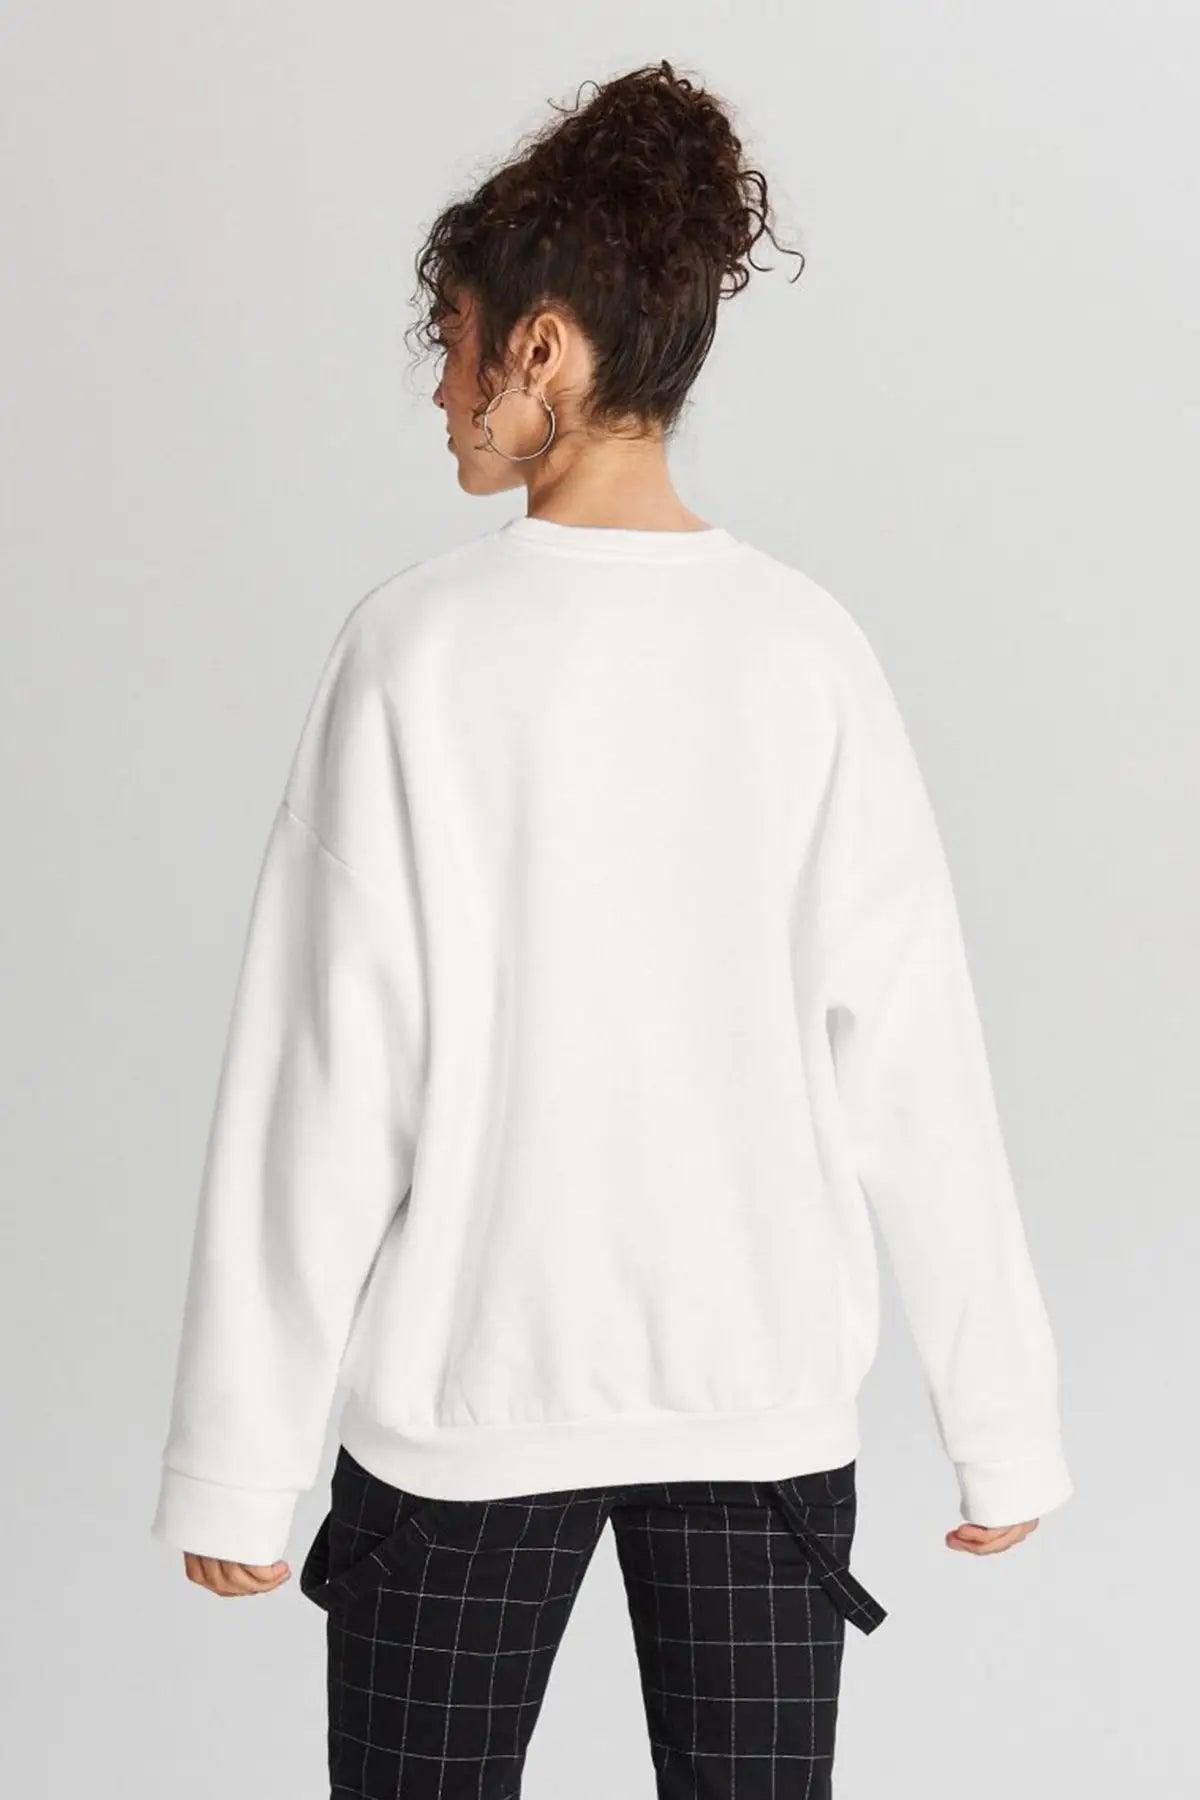 Authentic Oversize Kadın Sweatshirt - PΛSΛGE